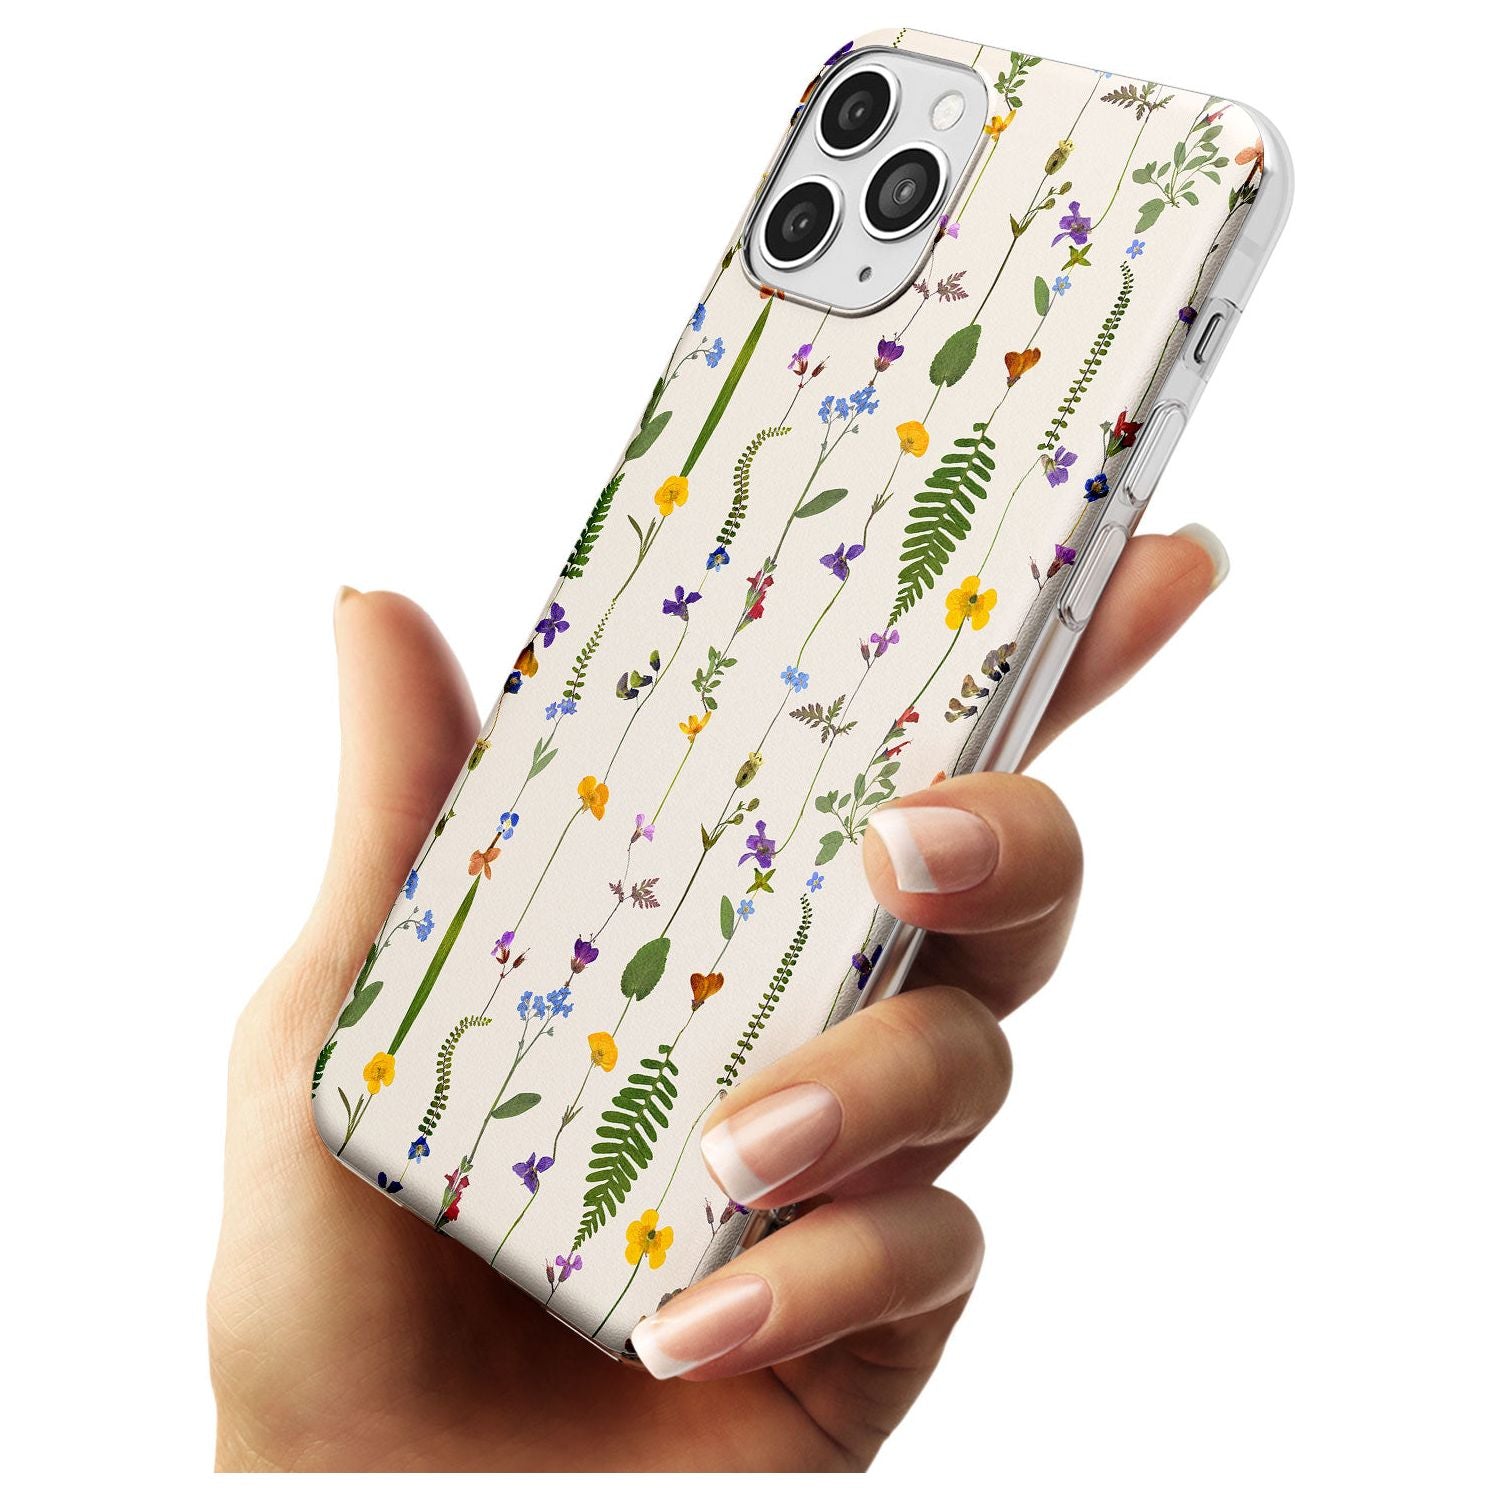 Wildflower Chain Design - Cream Slim TPU Phone Case for iPhone 11 Pro Max